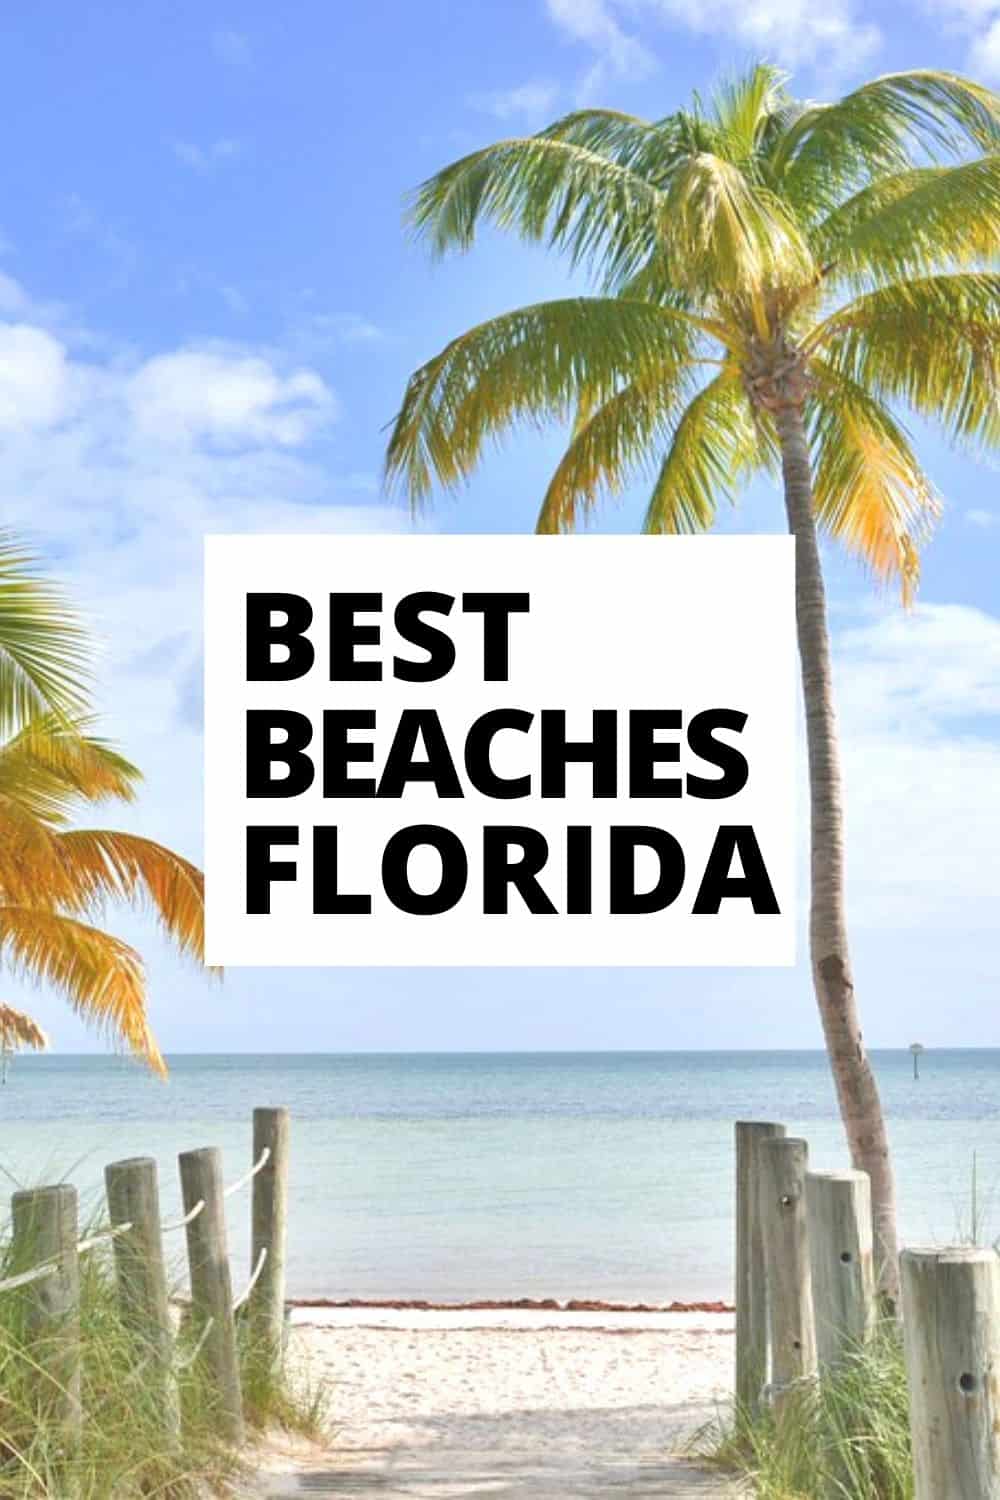 Best beaches in Florida